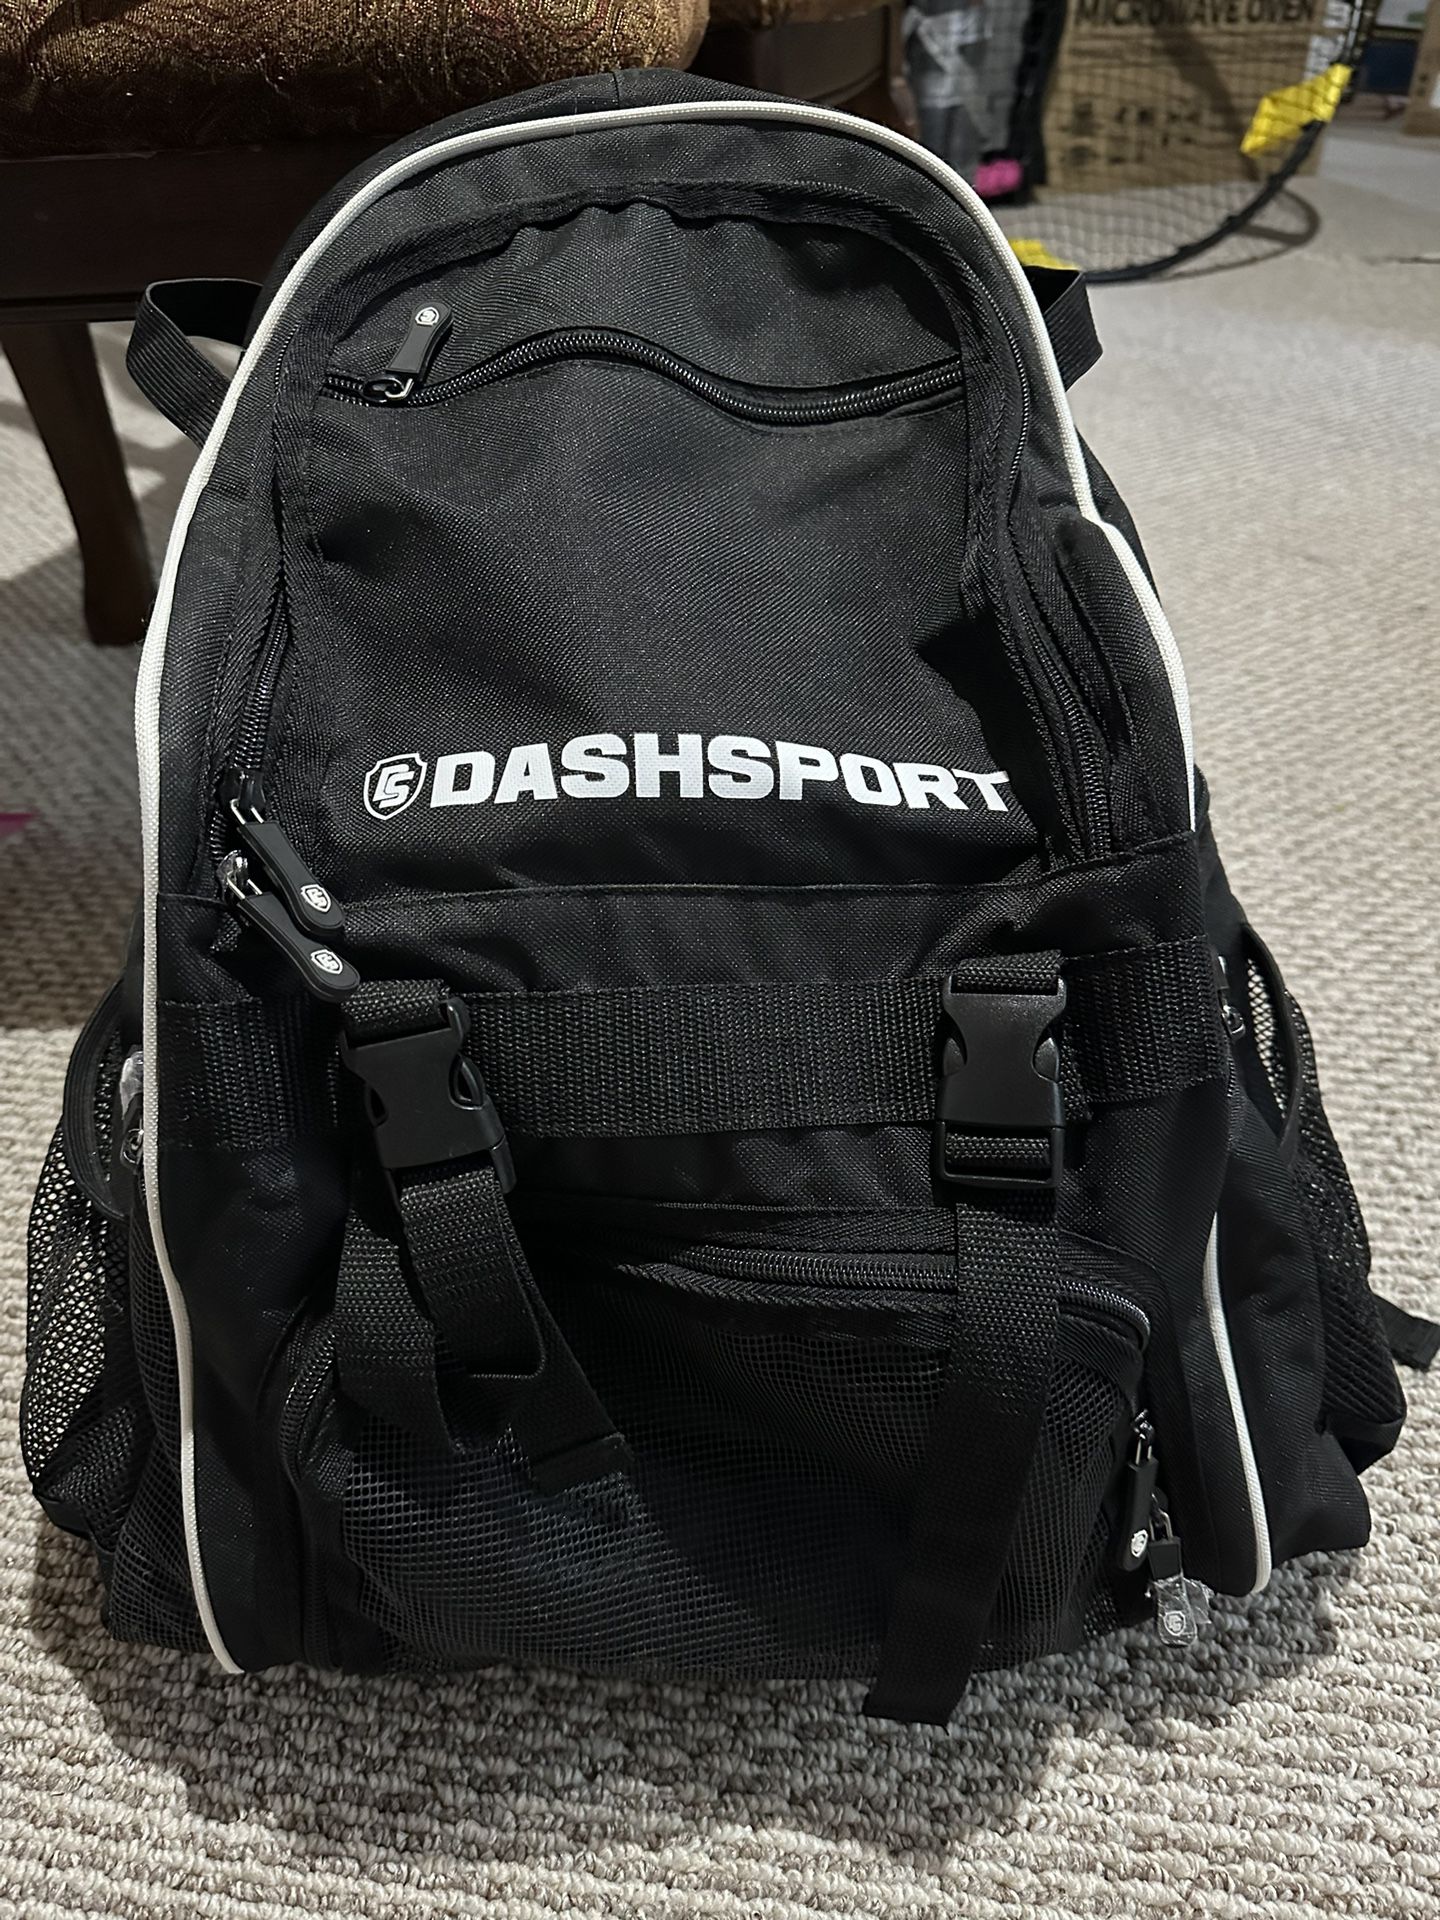 Dashsport Black Baseball Bag